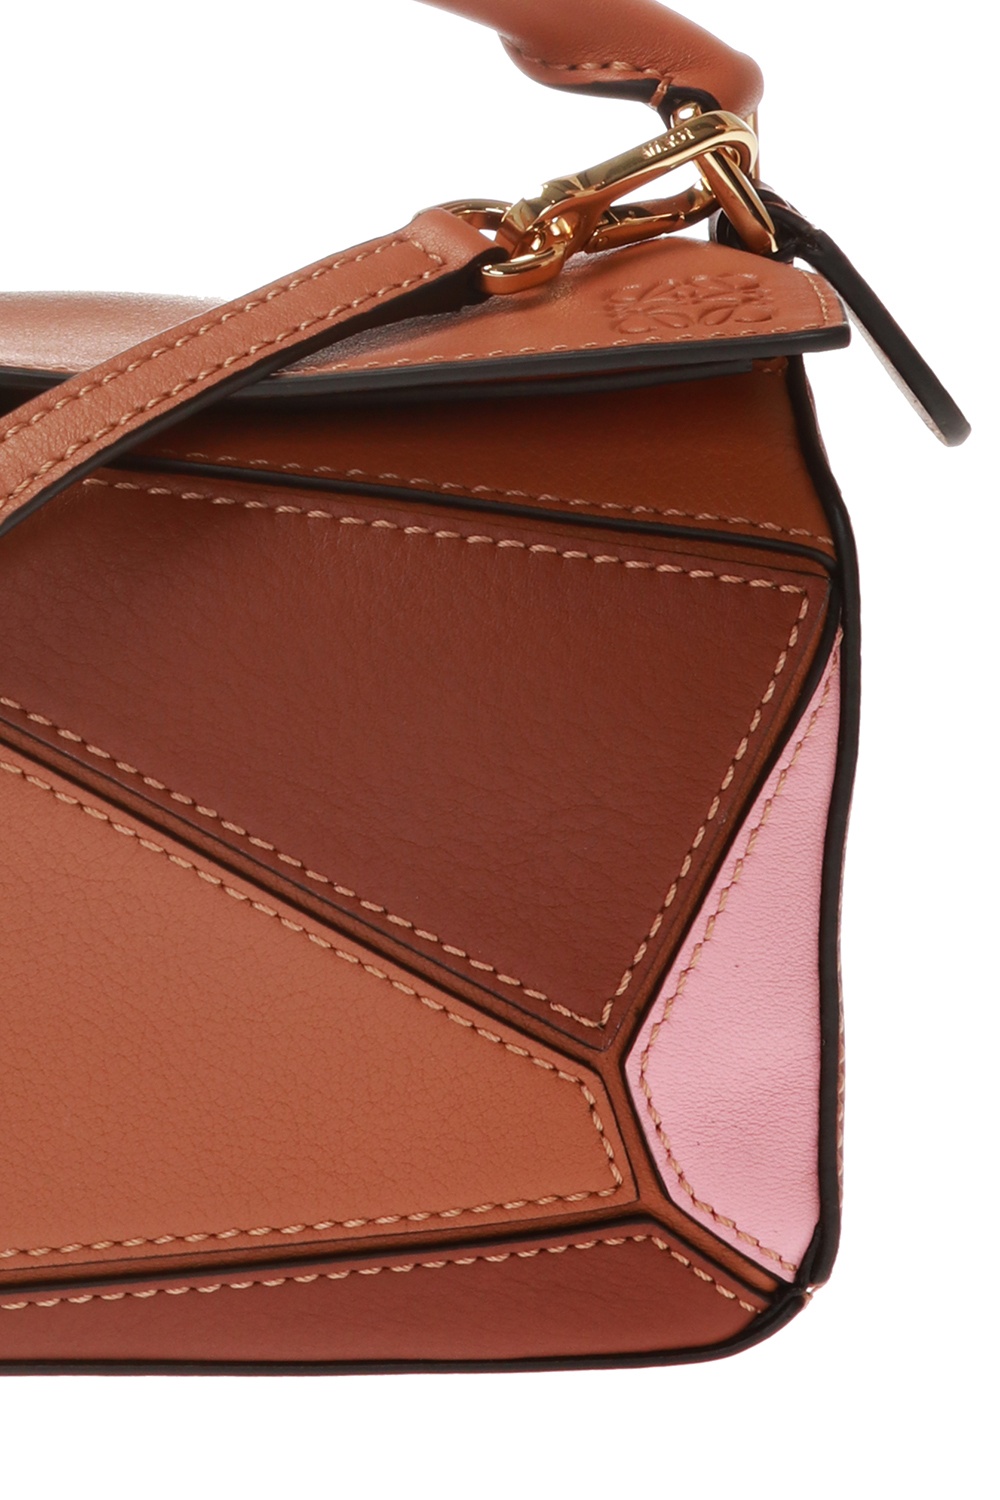 Loewe - Small Puzzle Tan & Pink Leather Shoulder Bag